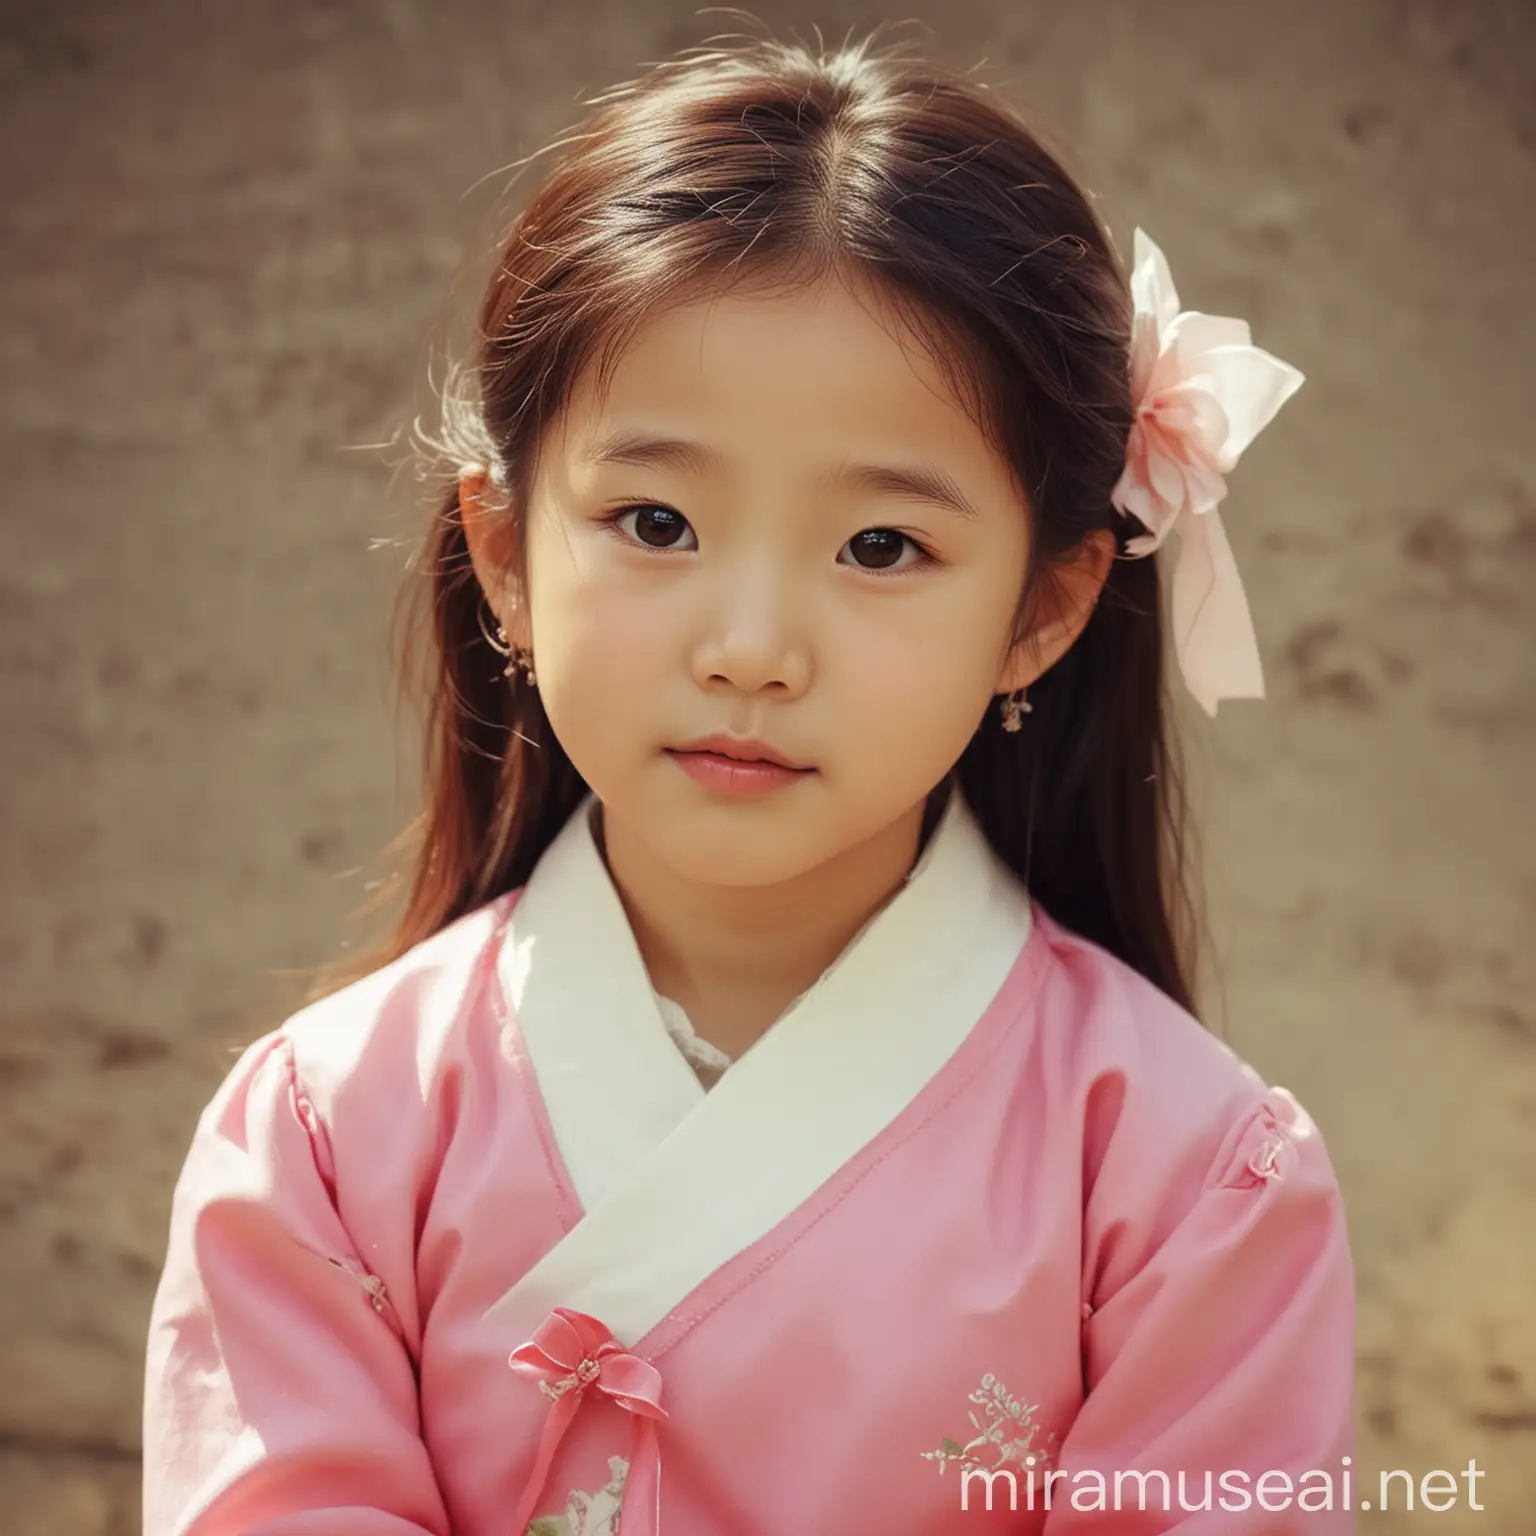 Korean Beautiful Little Girl Enjoying Childhood Moments